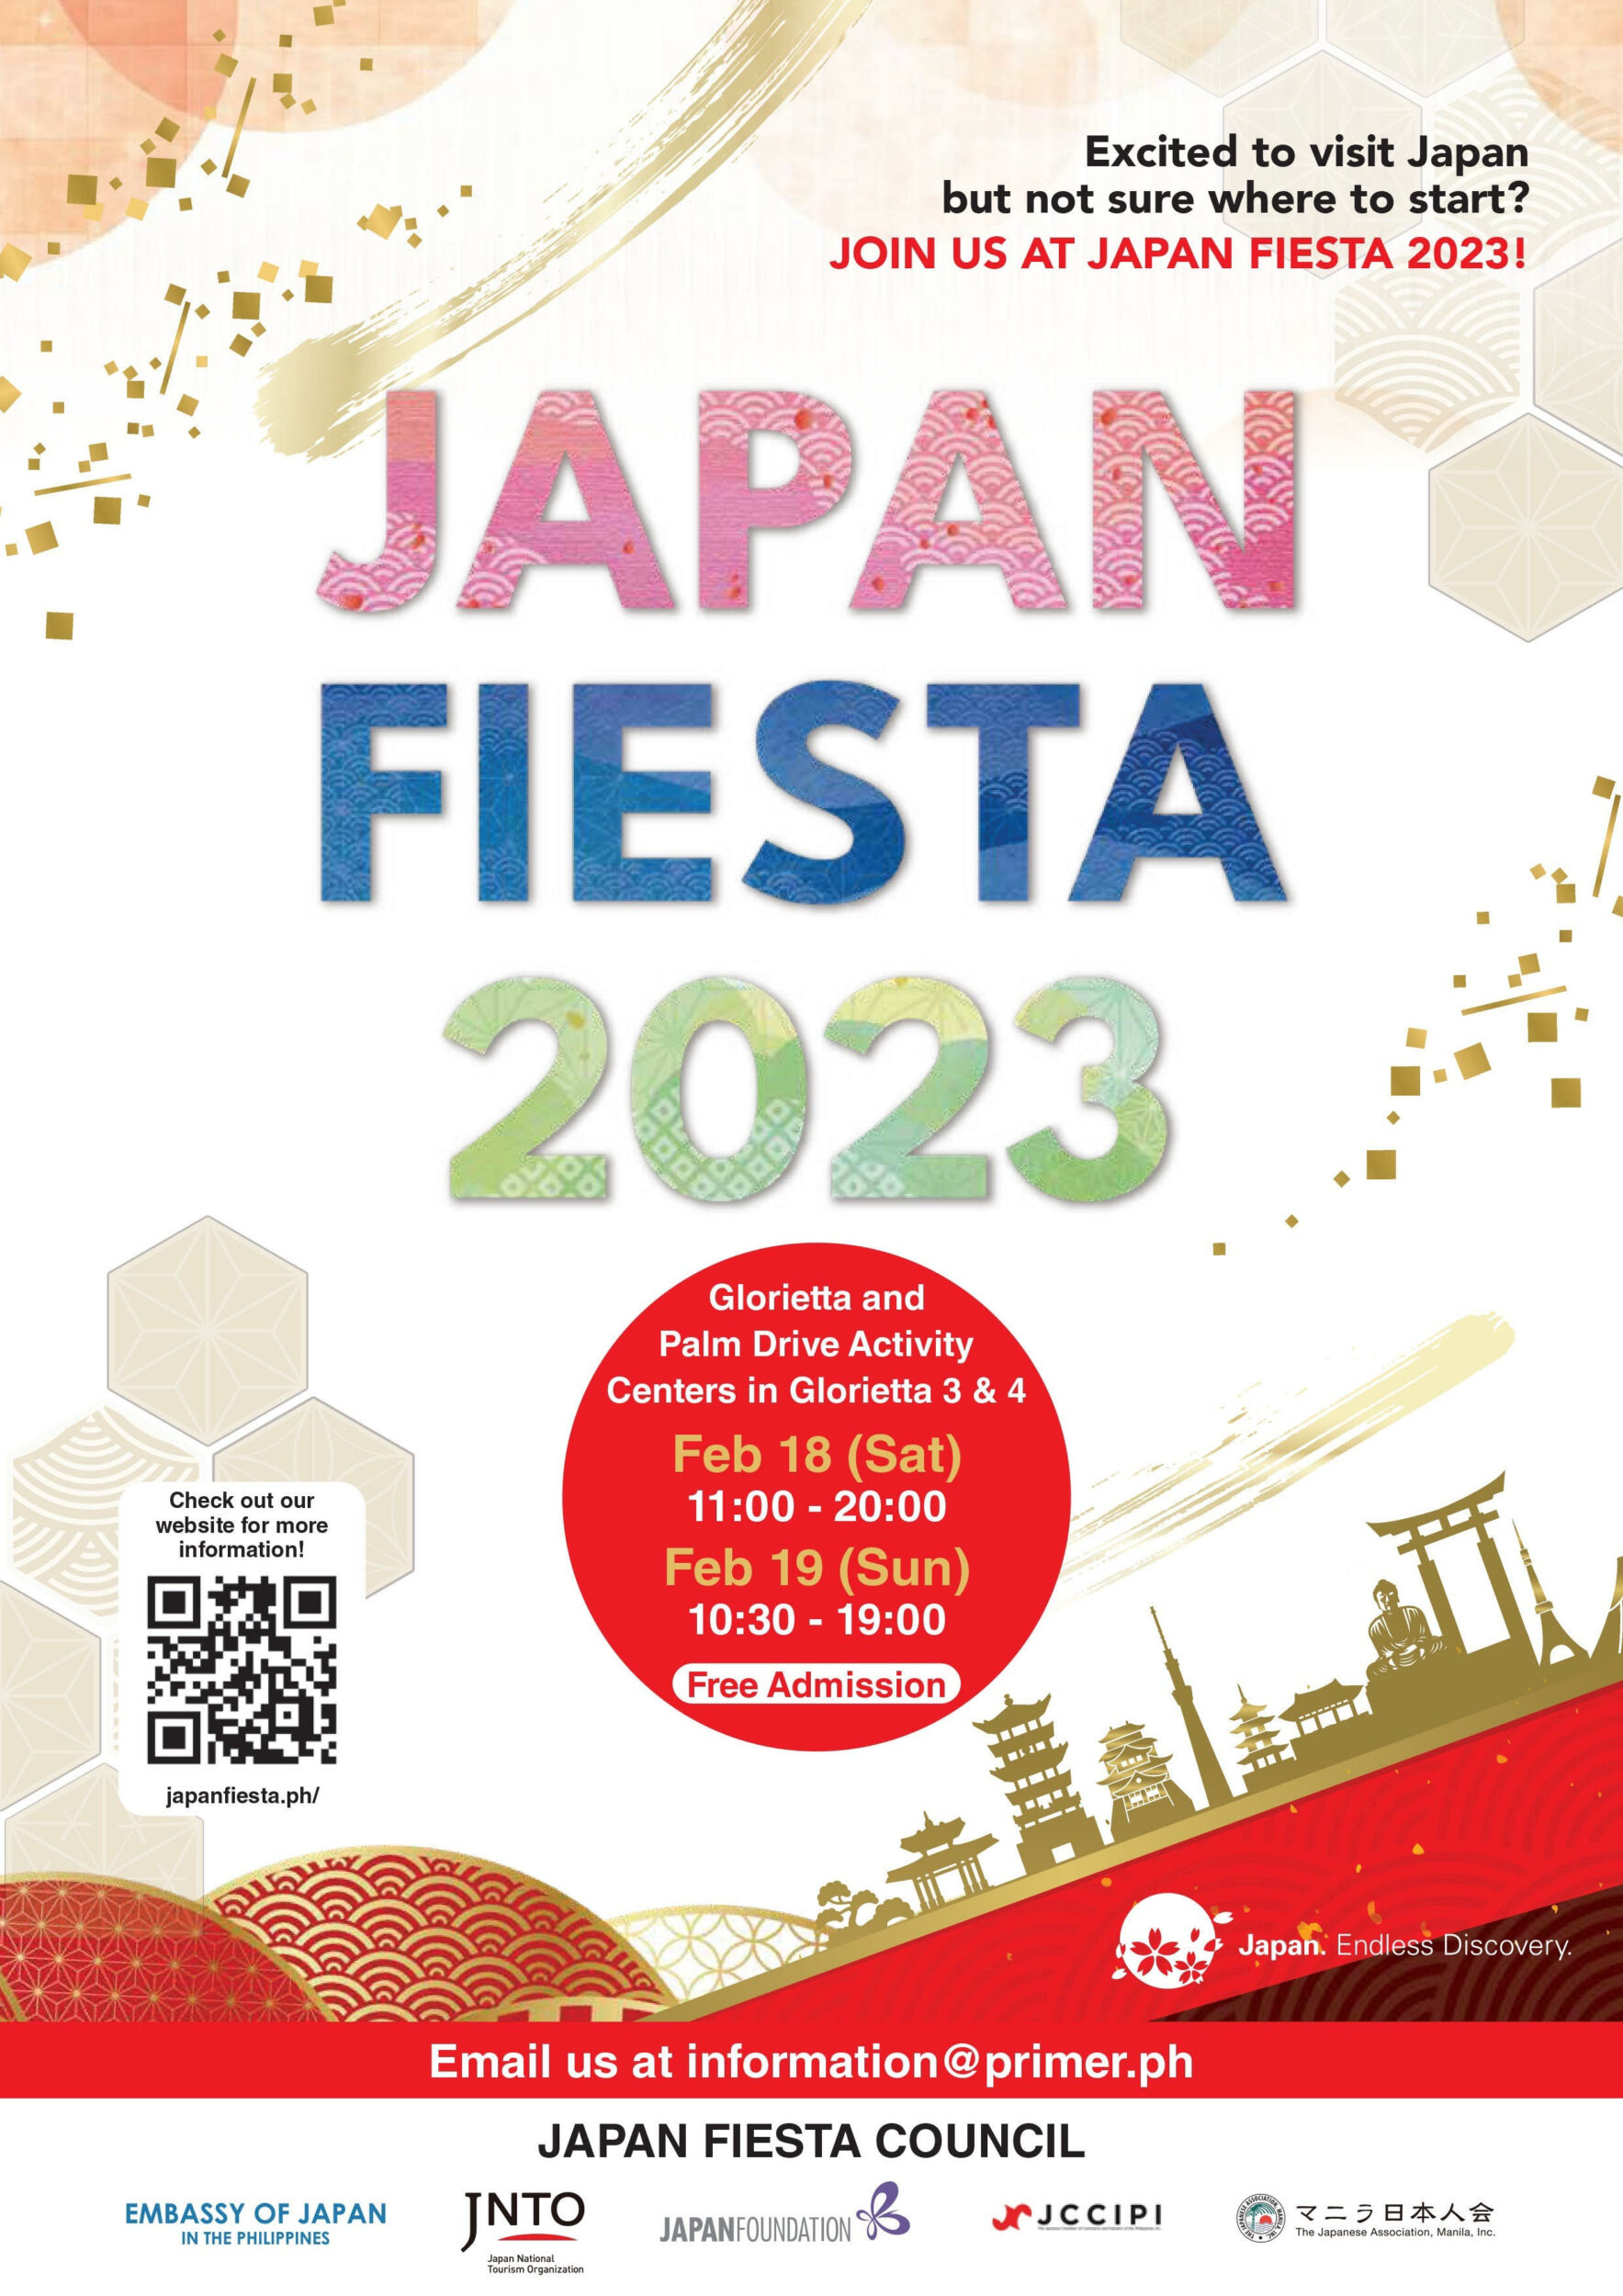 Japan Fiesta Returns This February At Glorietta